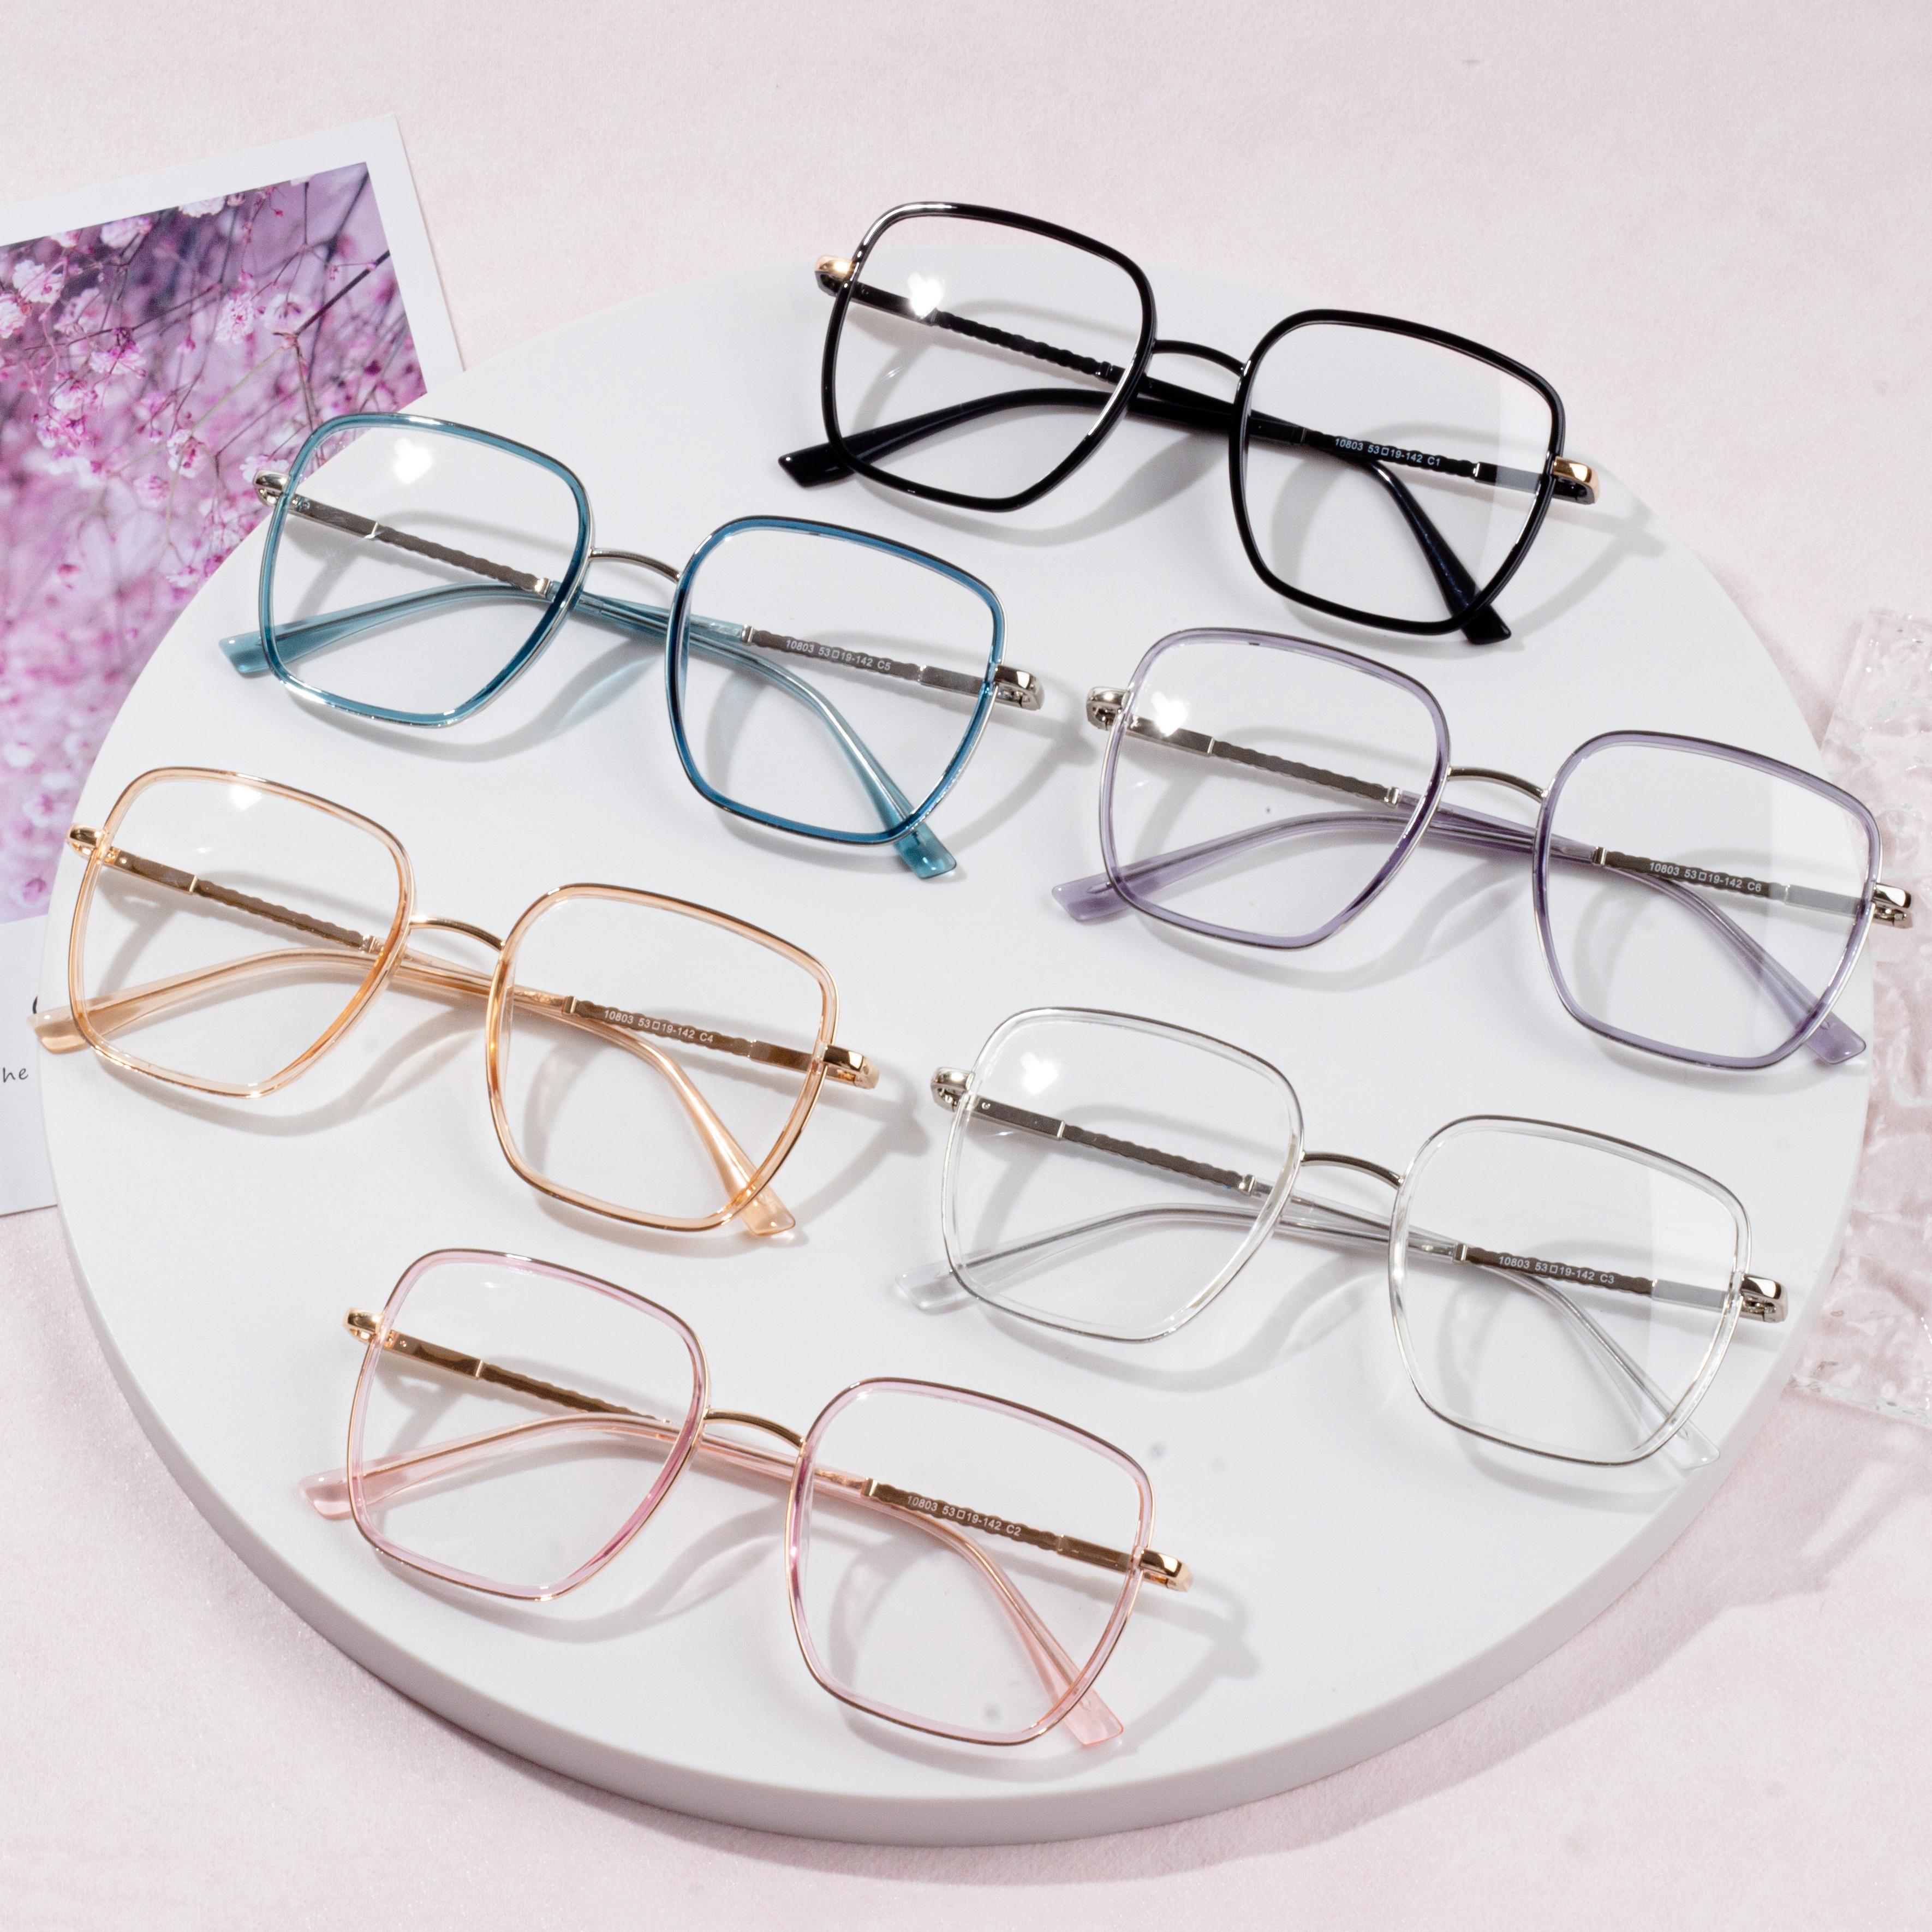 different eyeglass frames